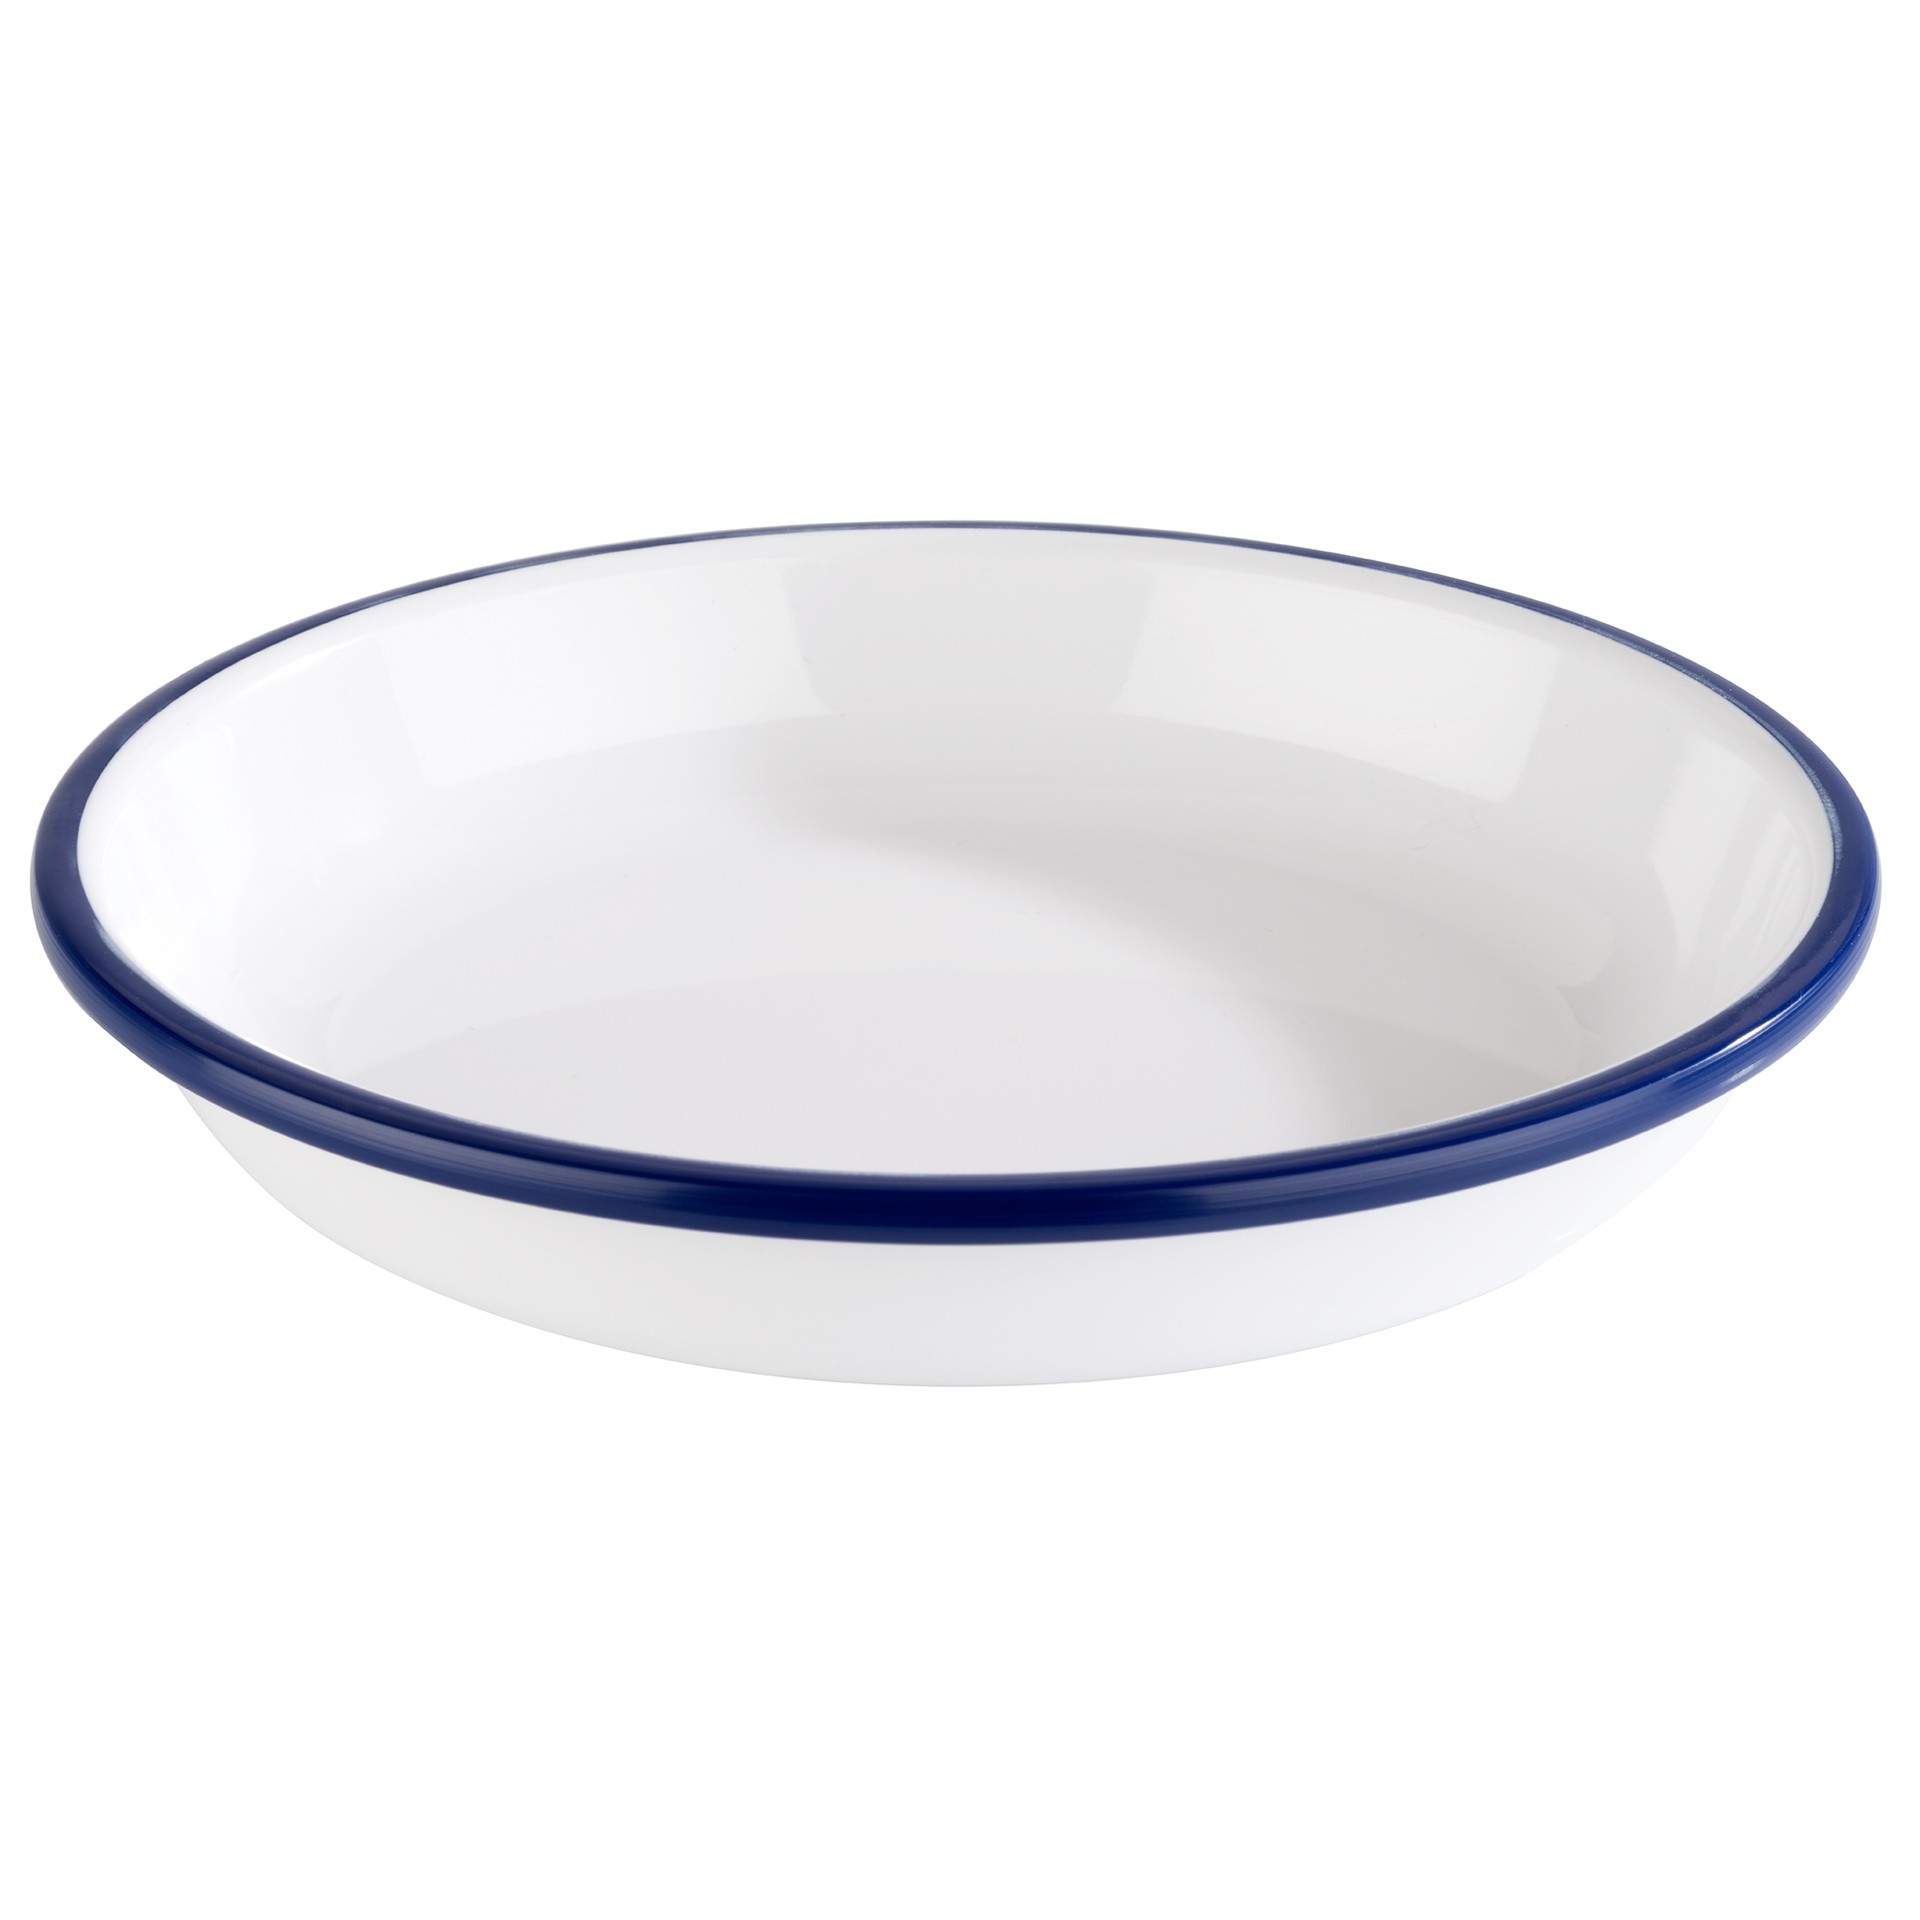 Suppenteller - Serie Enamel Look - weiß / blau - rund - Abm. 3 cm - Ø 19,0 cm - Melamin - 84952-B